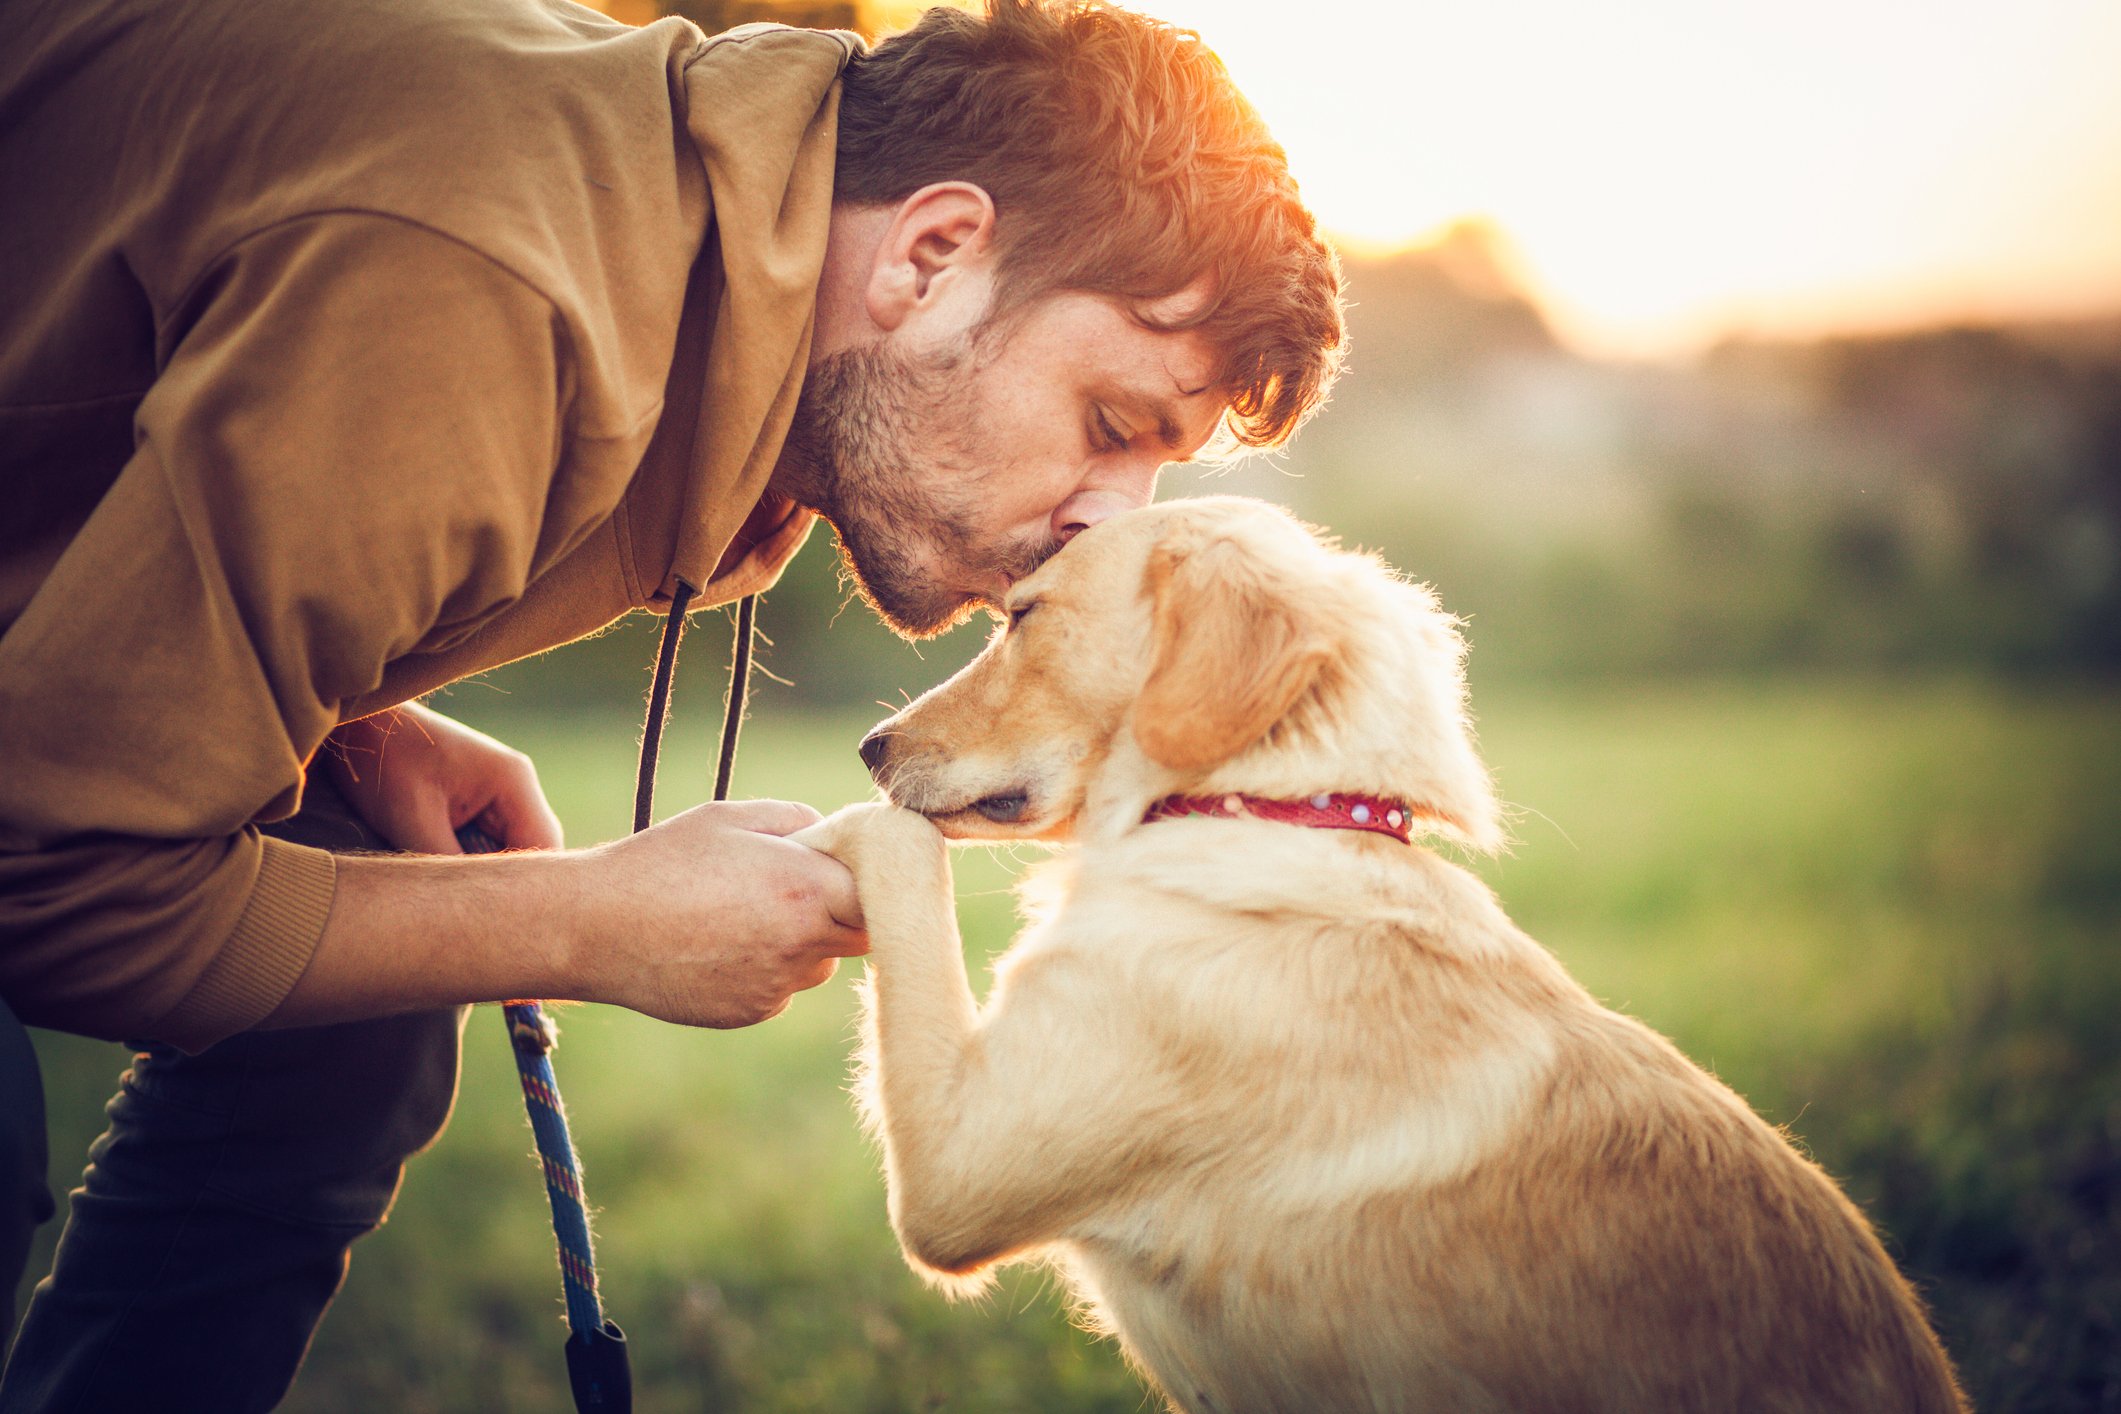 Man making love to a dog